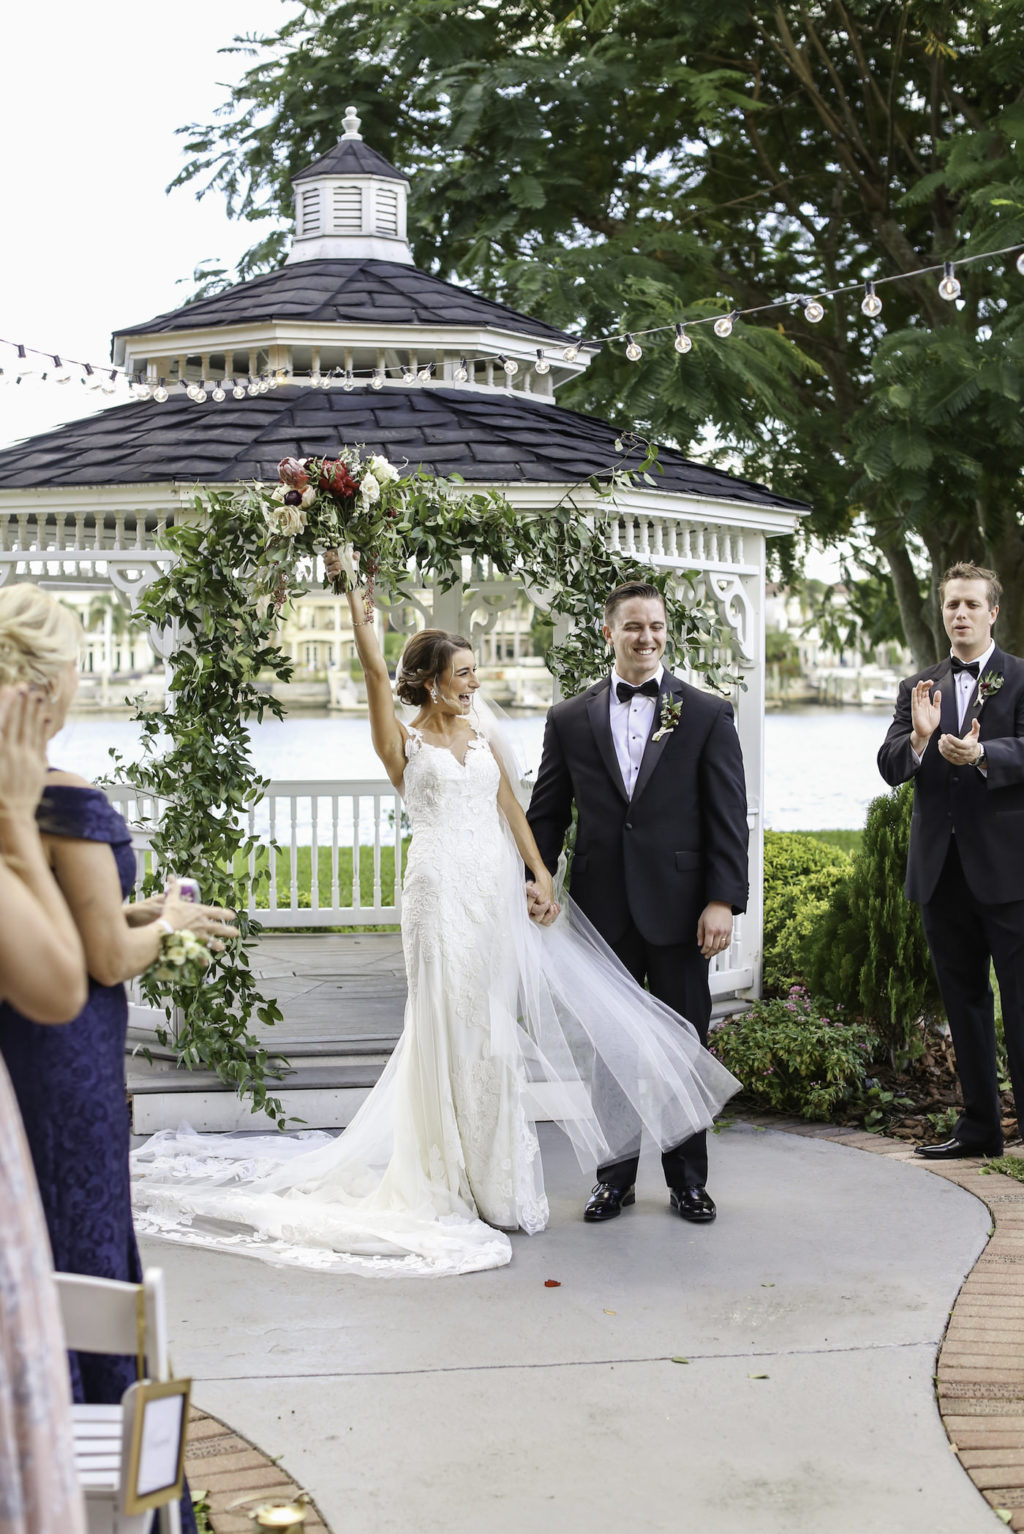 Excited Reaction of Bride and Groom Wedding Ceremony Portrait | Wedding Photographer Lifelong Photography Studio | Waterfront Tampa Wedding Venue Davis Islands Garden Club